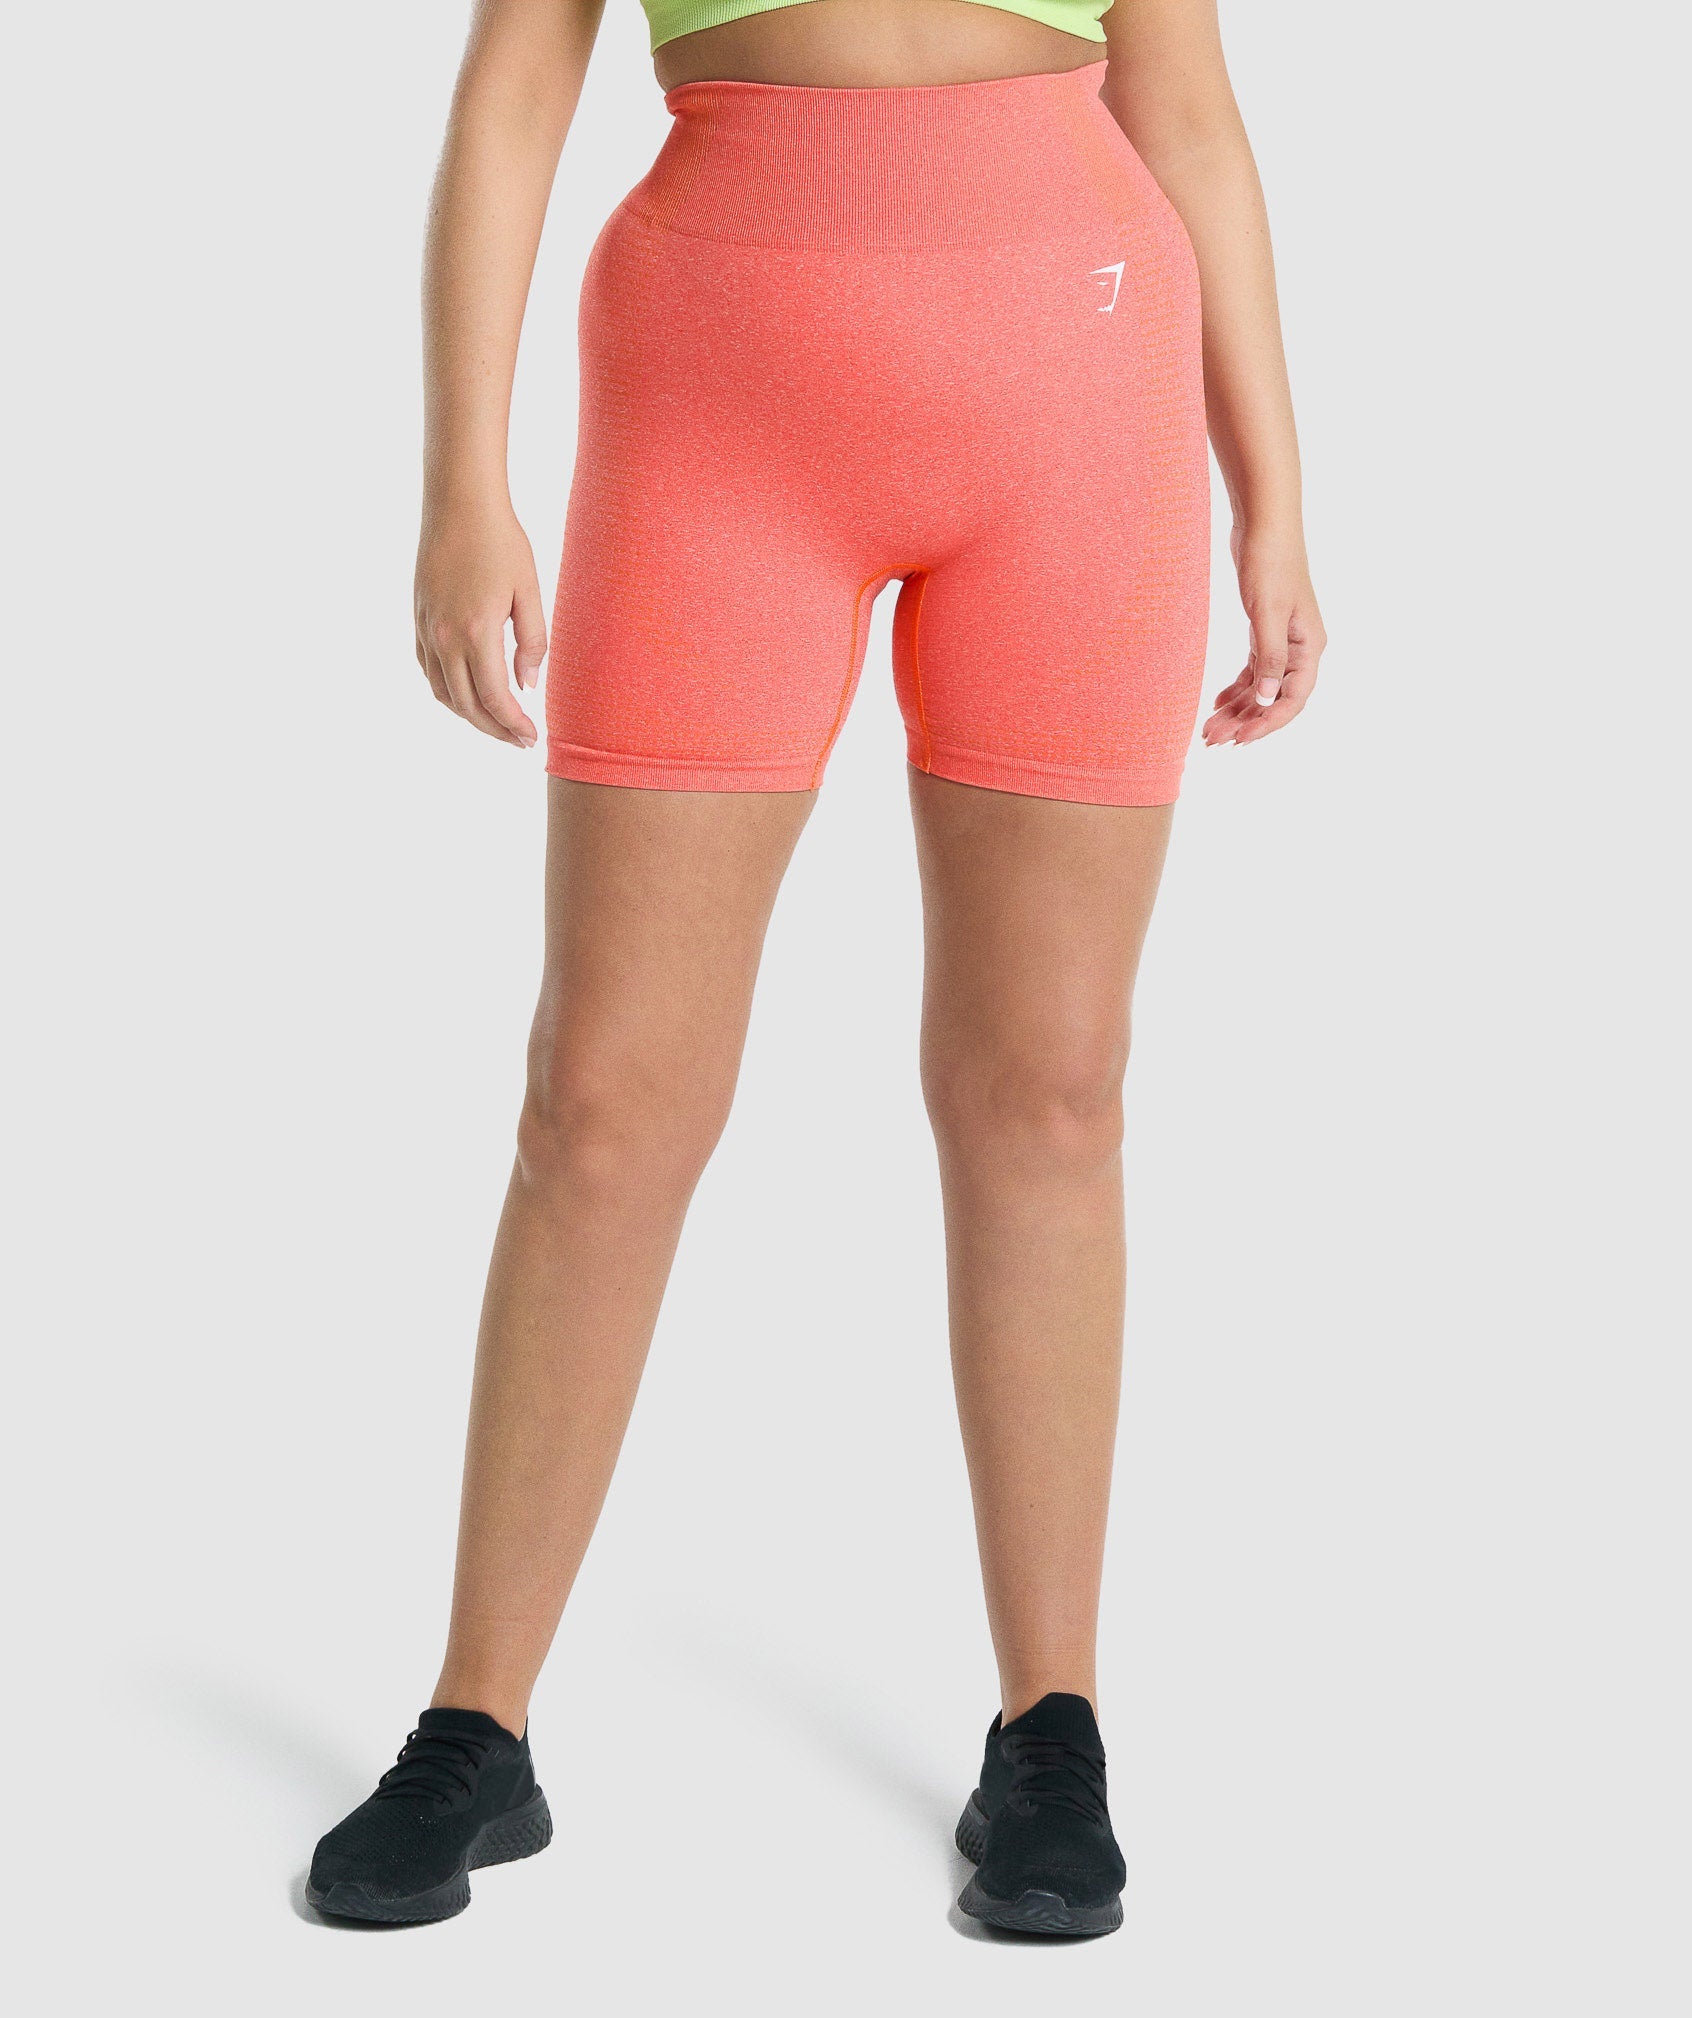 Vital Seamless 2.0 Shorts in Orange Marl